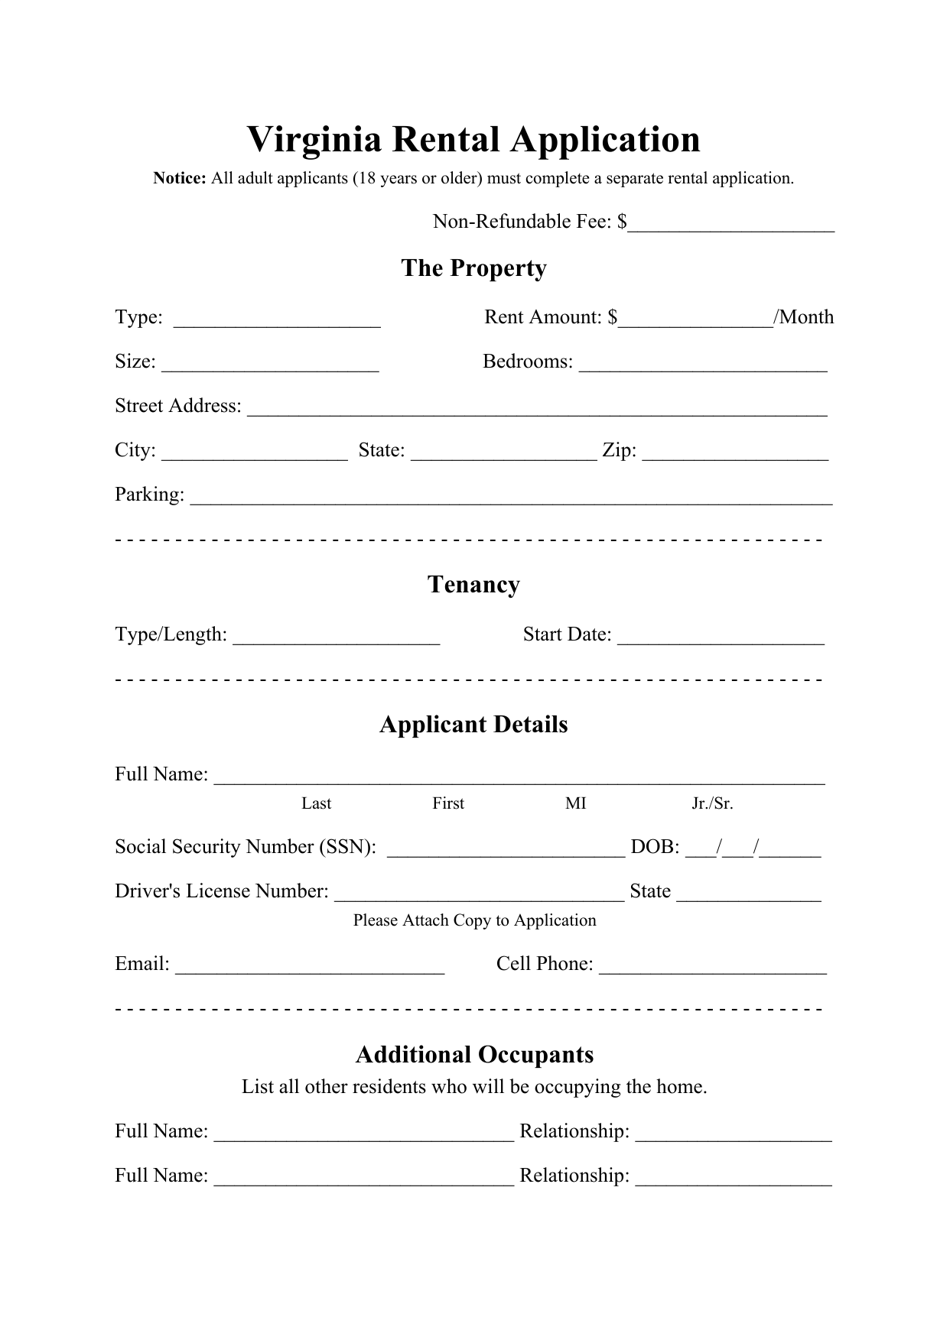 Rental Application Form - Virginia, Page 1